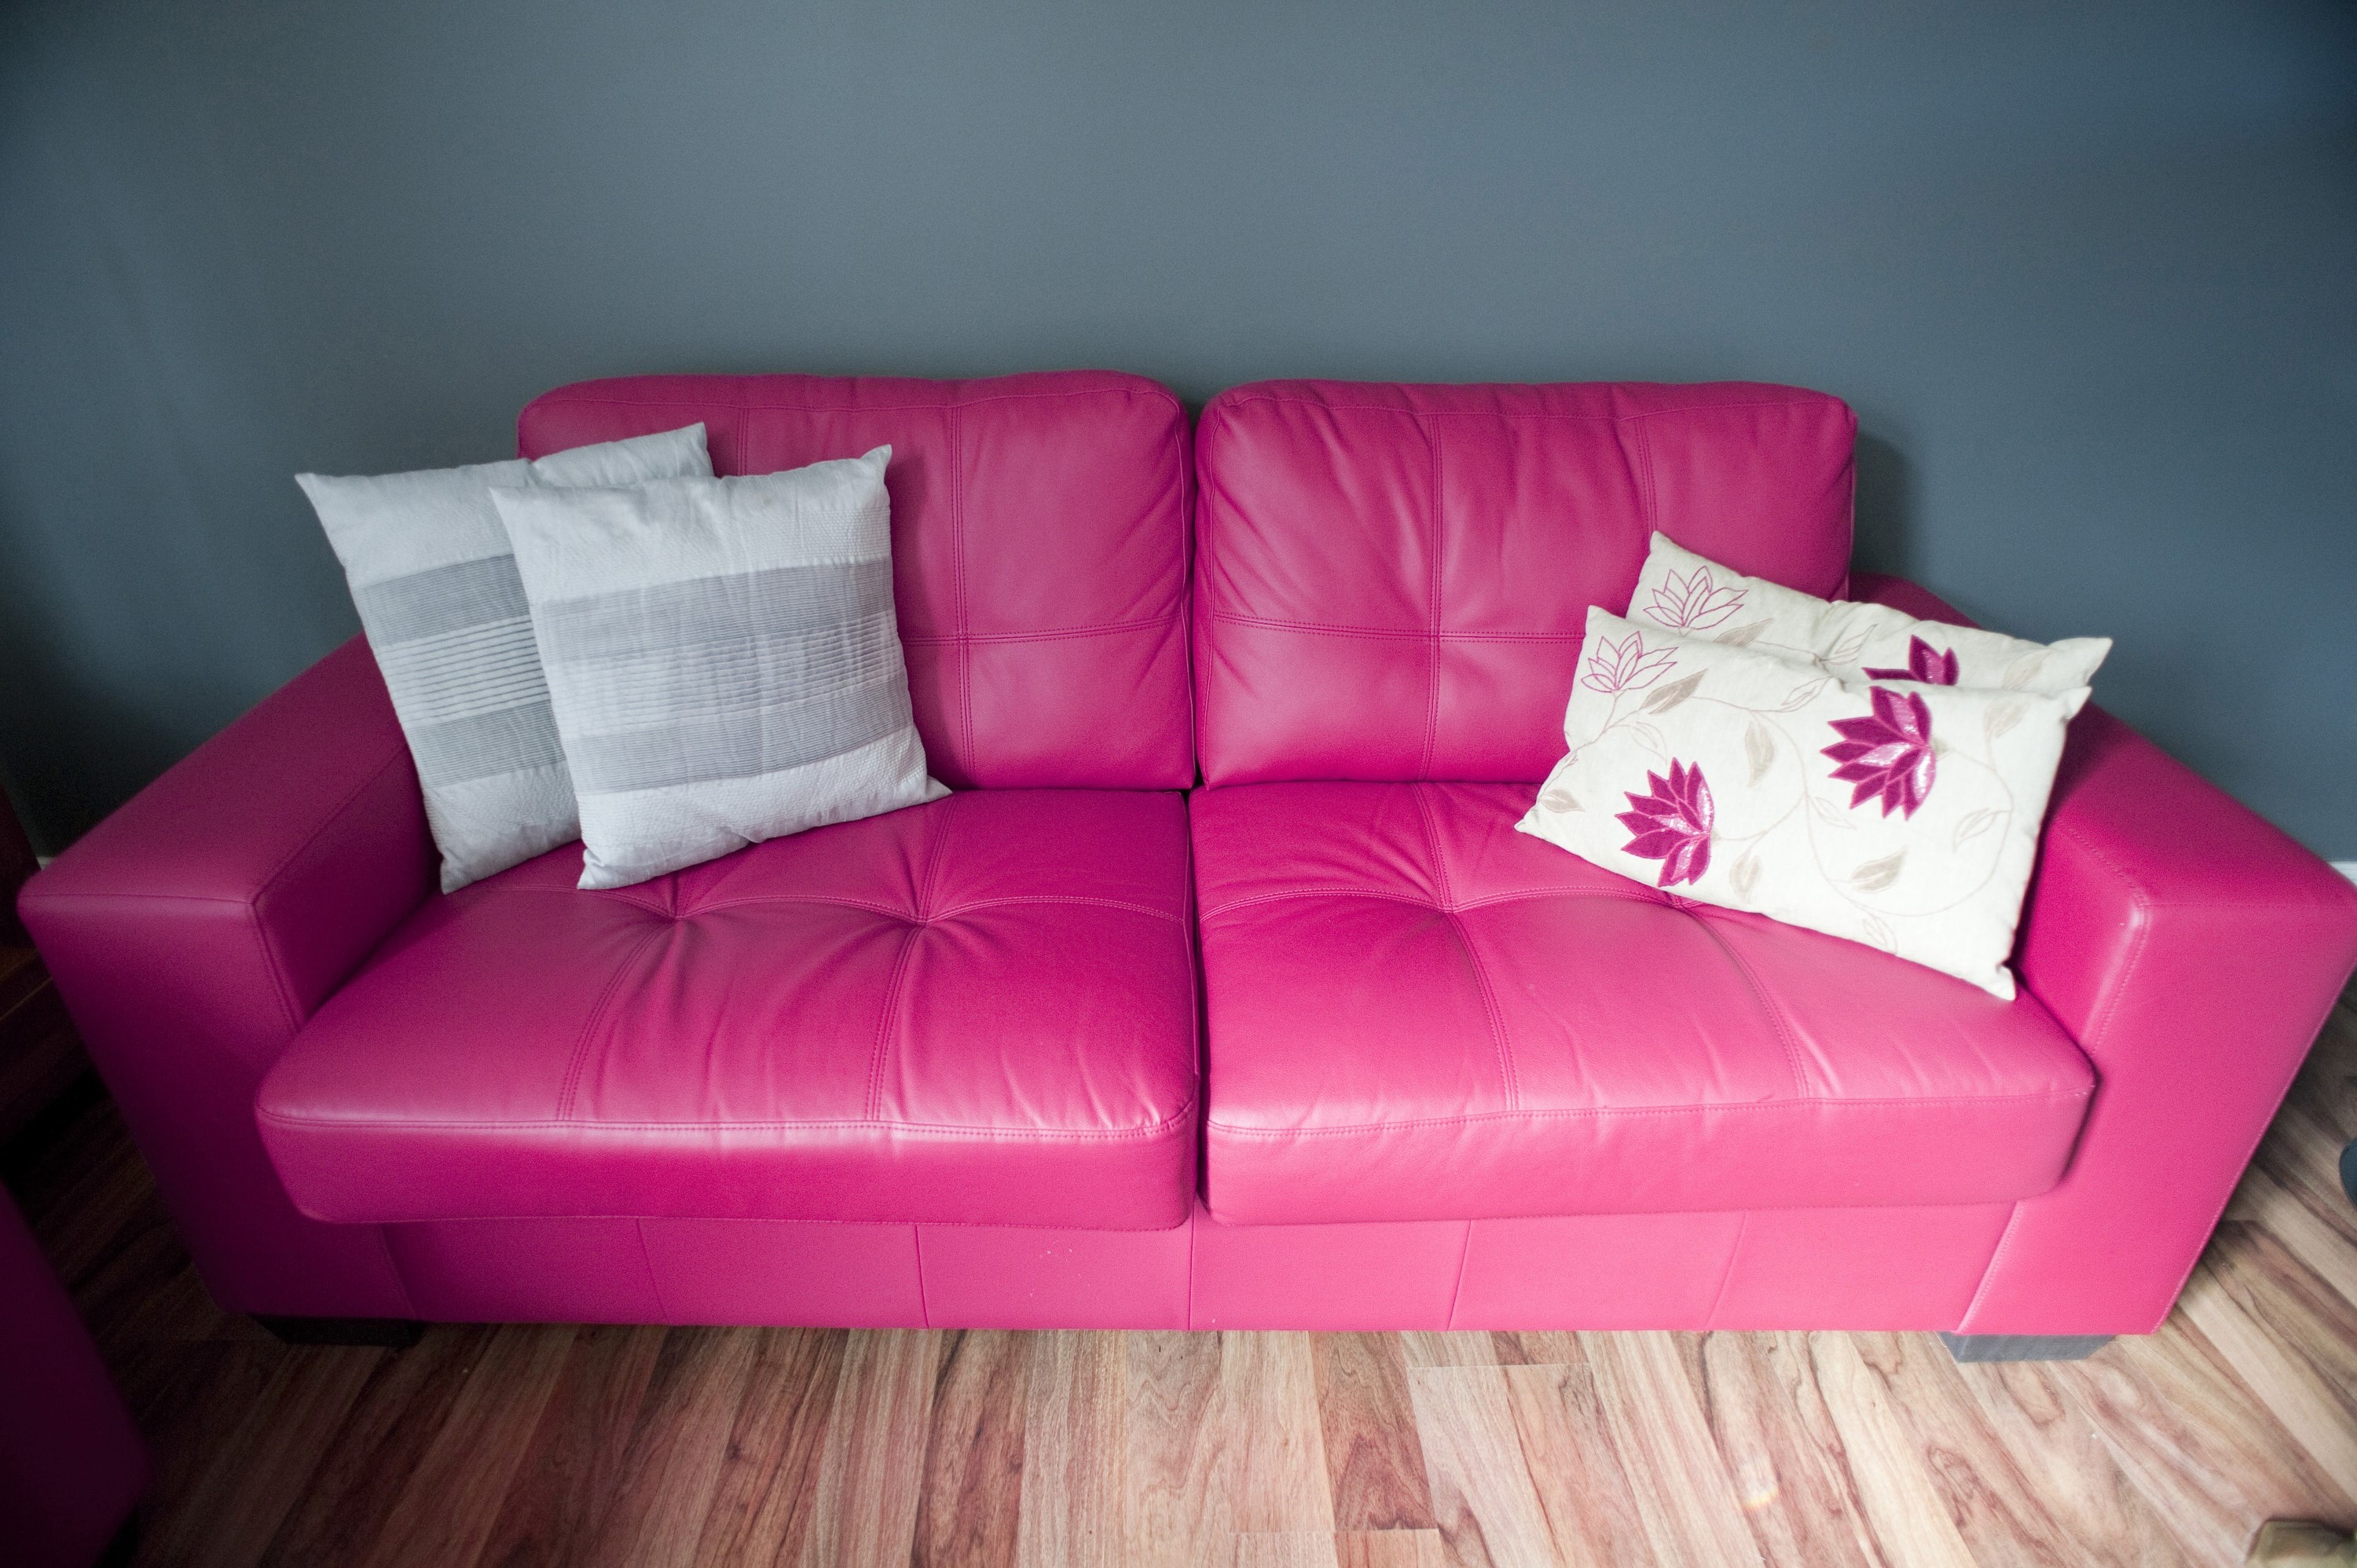 Free Image Of Stylish Pink Leather Sofa, Pink Leather Furniture